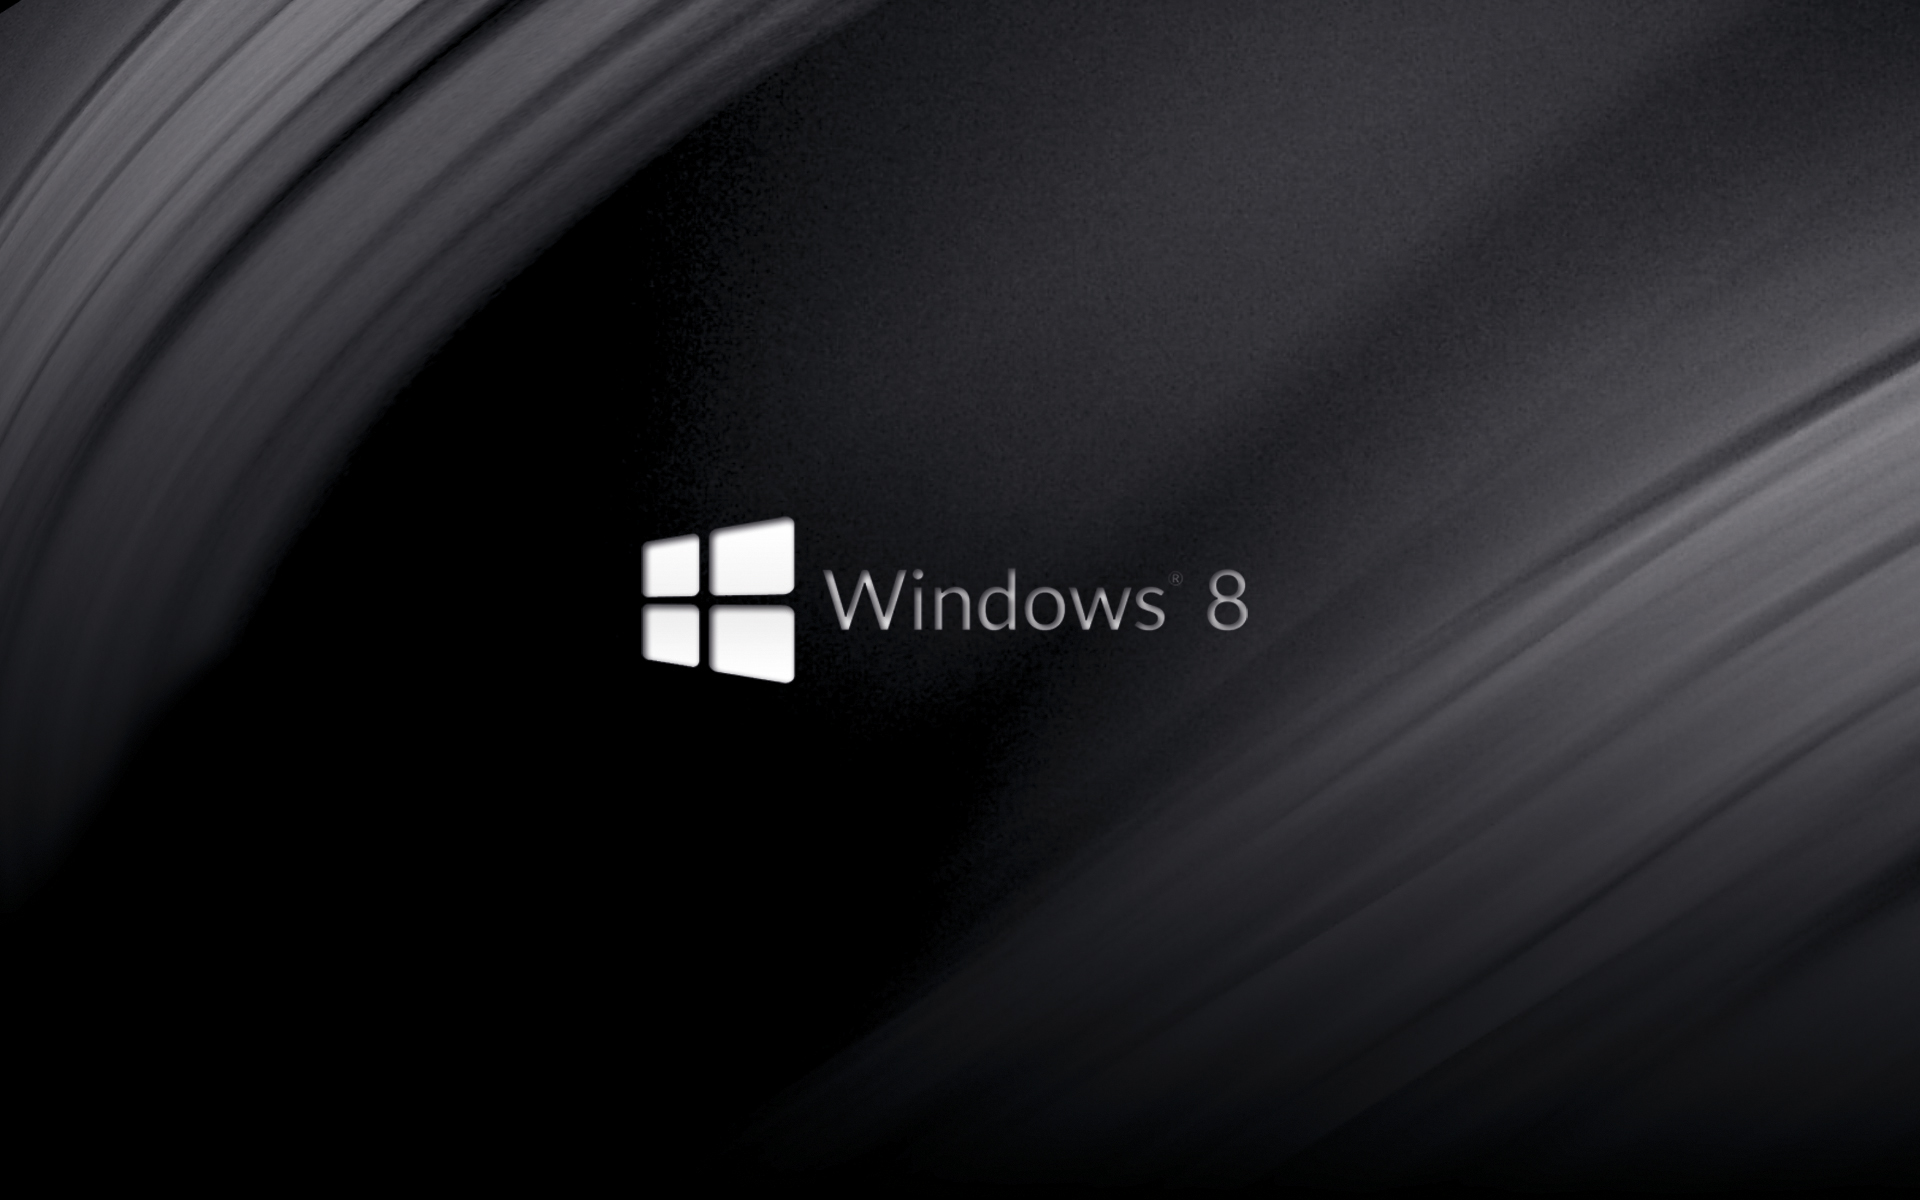 Windows 8 Wallpaper Hd 3d For Desktop Black - Windows 8 Imagenes Hd - HD Wallpaper 